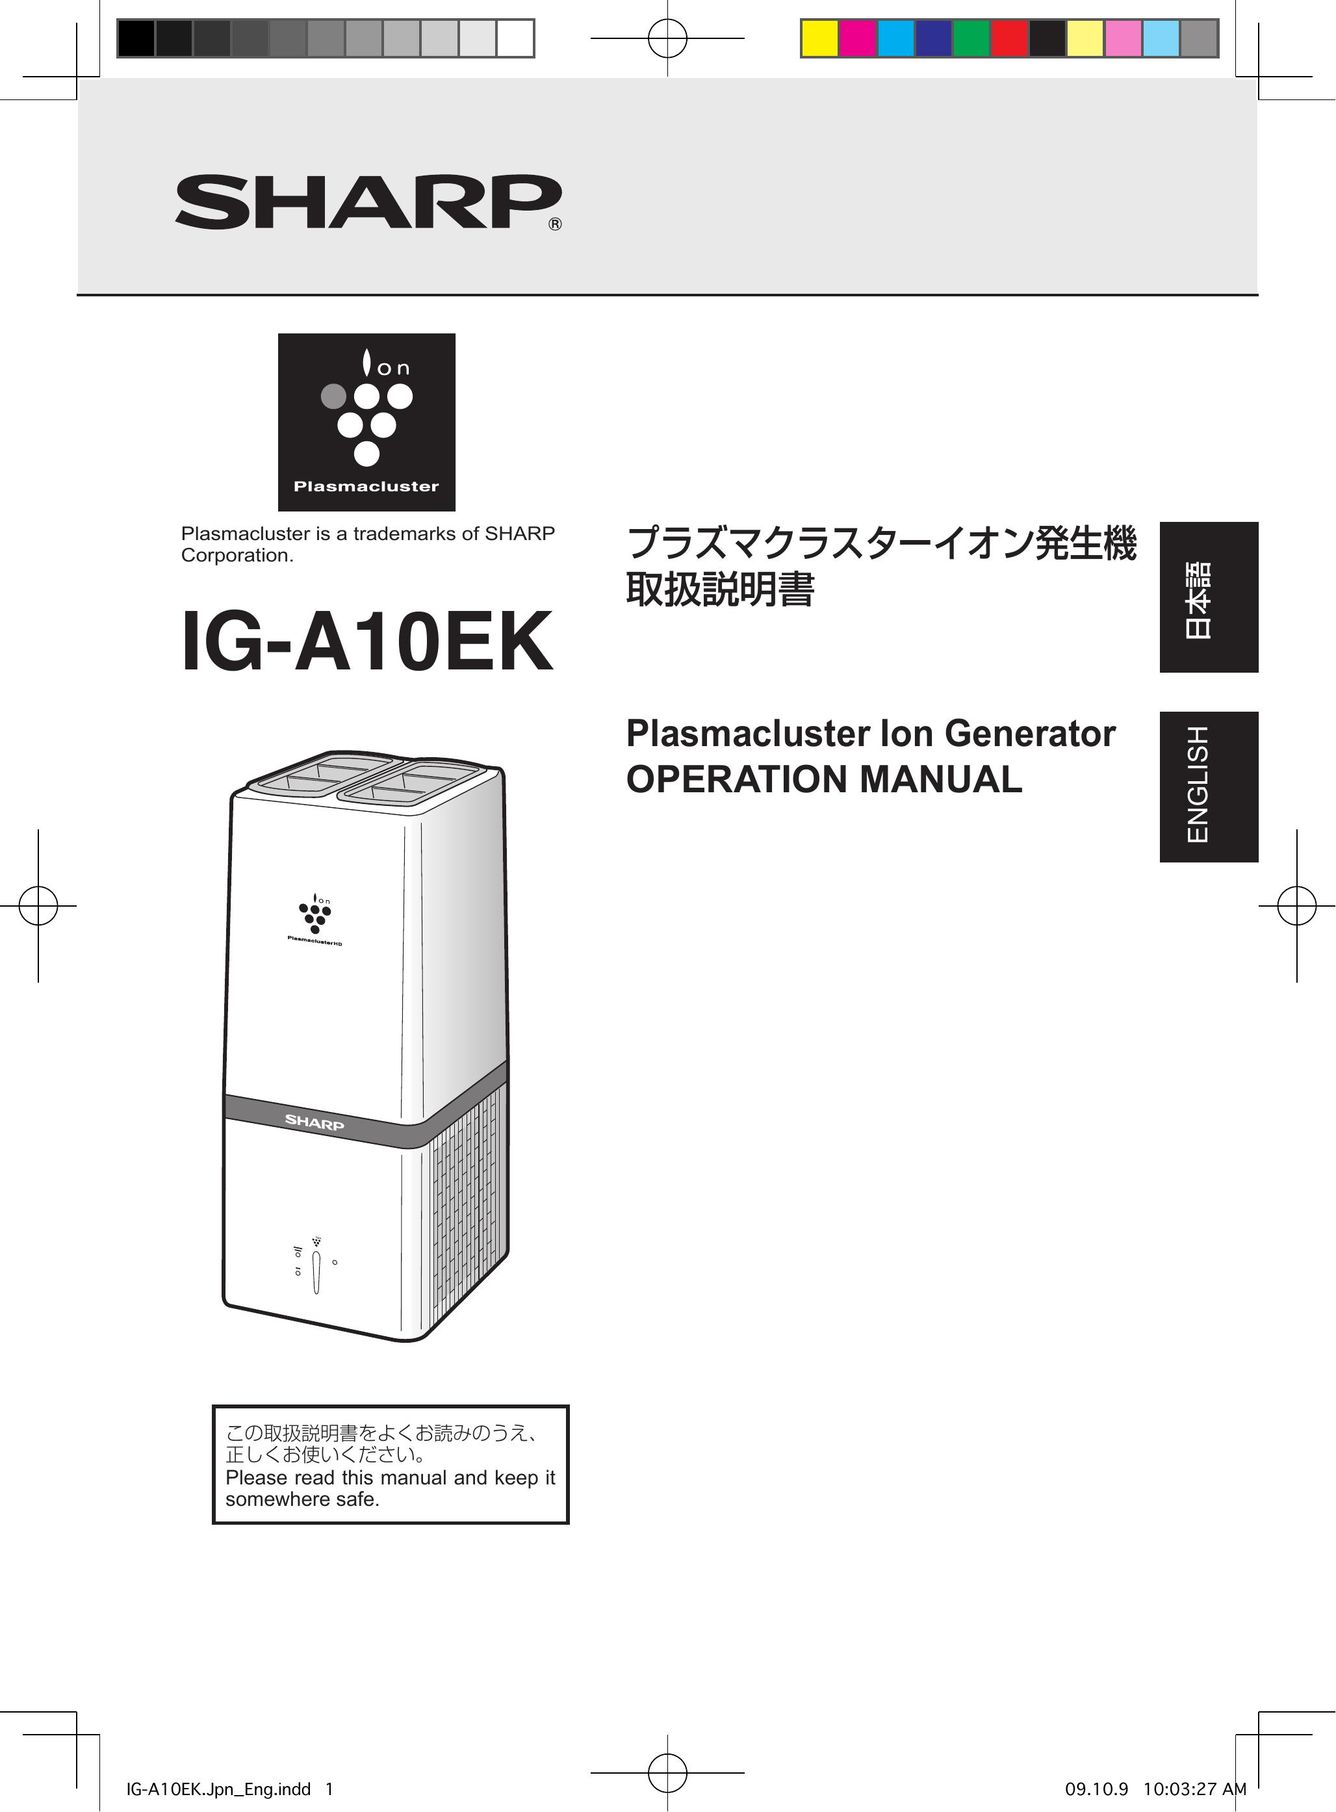 Sharp IG-A10EK Air Cleaner User Manual